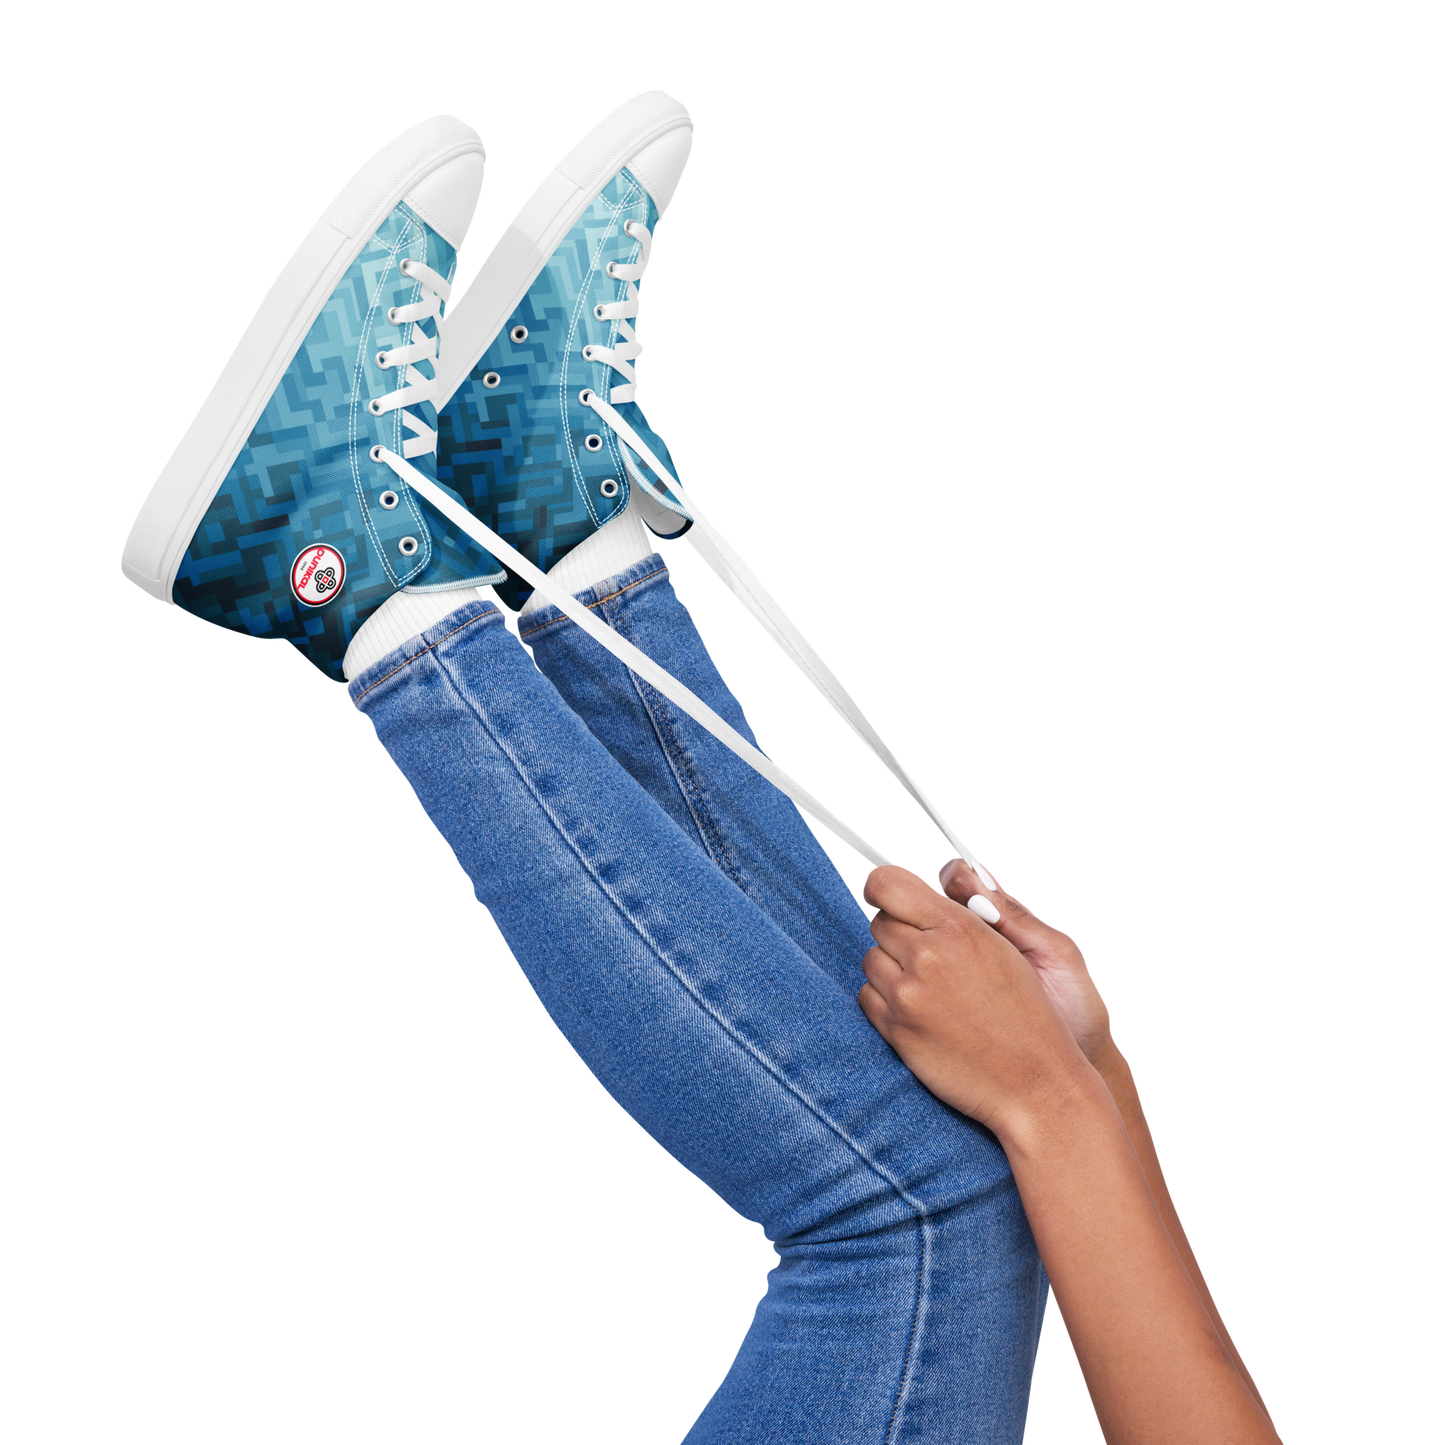 Women's Canvas Sneakers ❯ Polygonal Gradient ❯ Celestial Blue